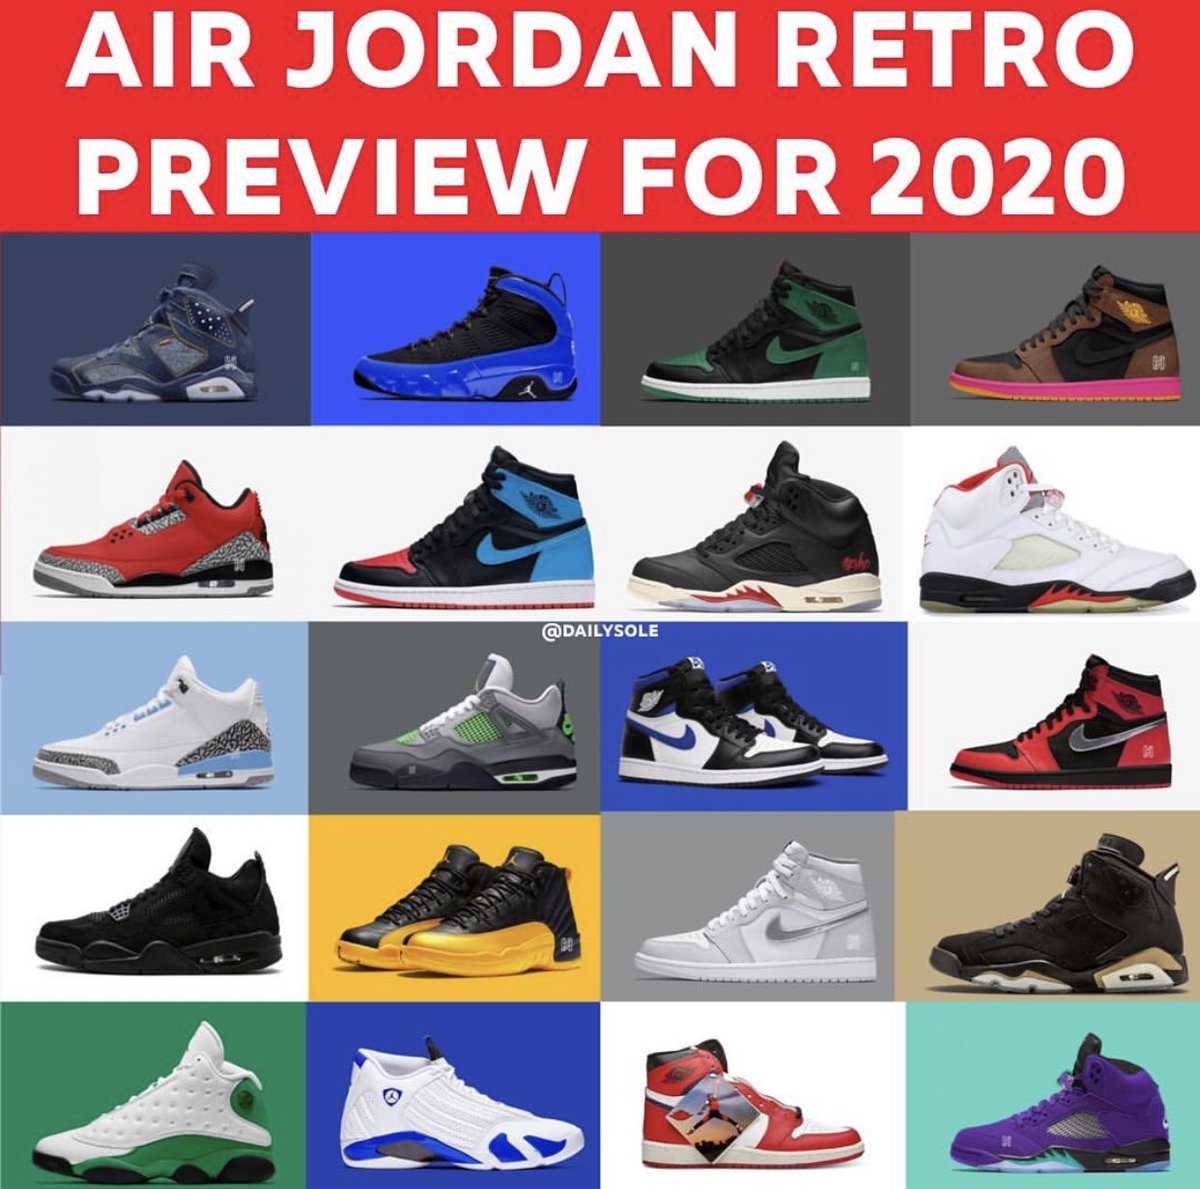 2020 retro jordan release